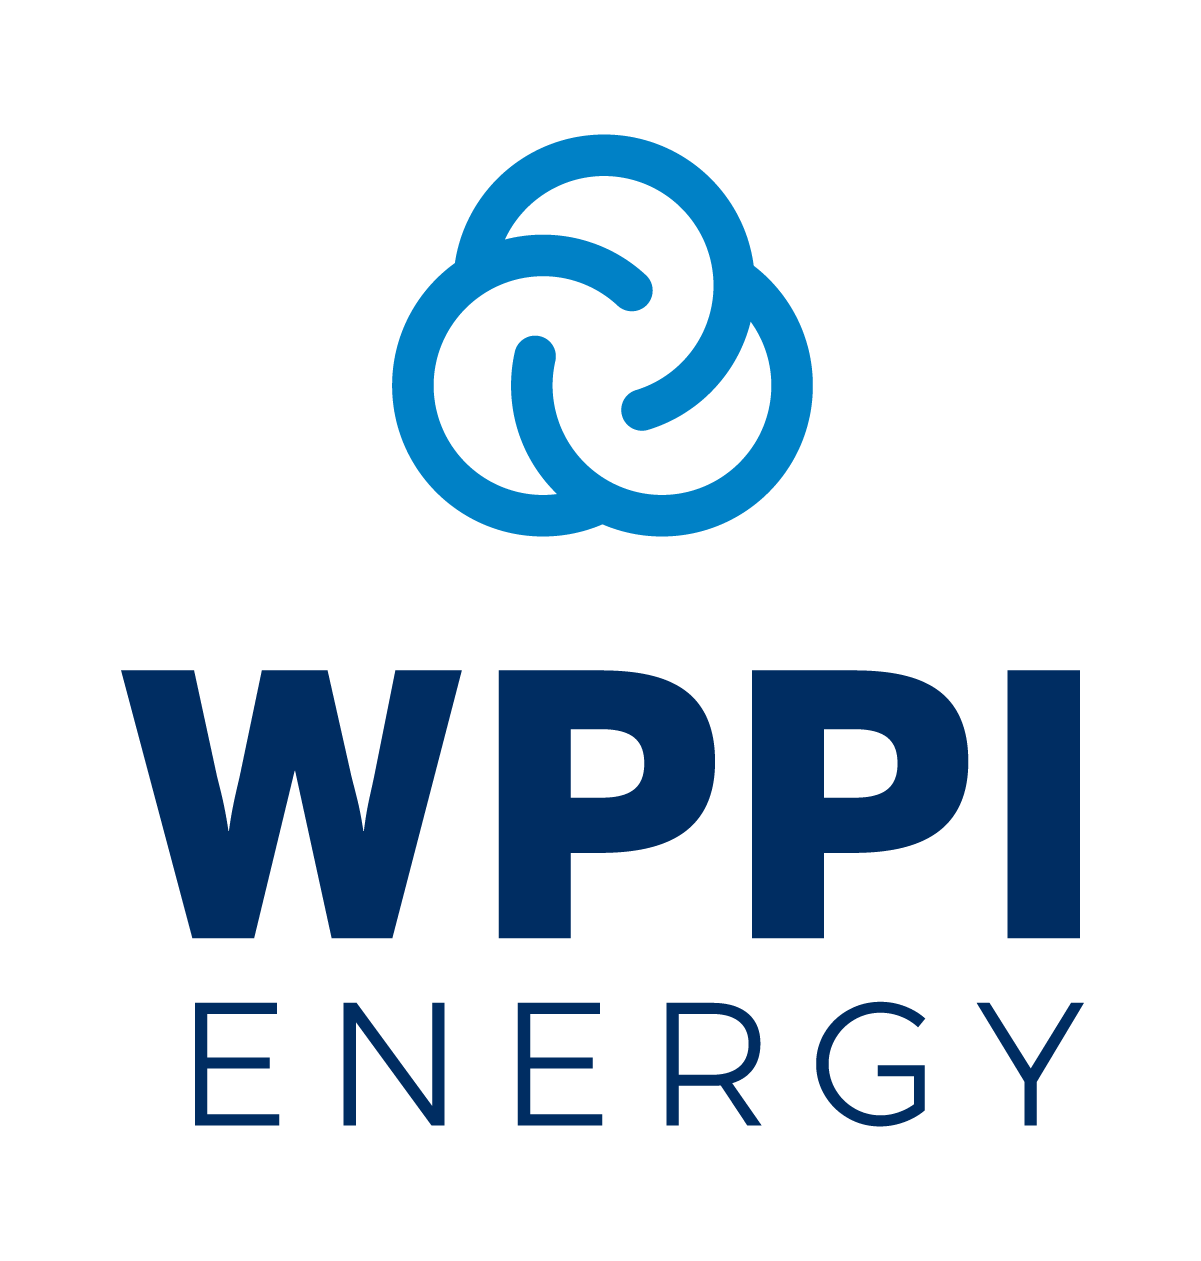 WPPI Energy - Official Seal or Logo